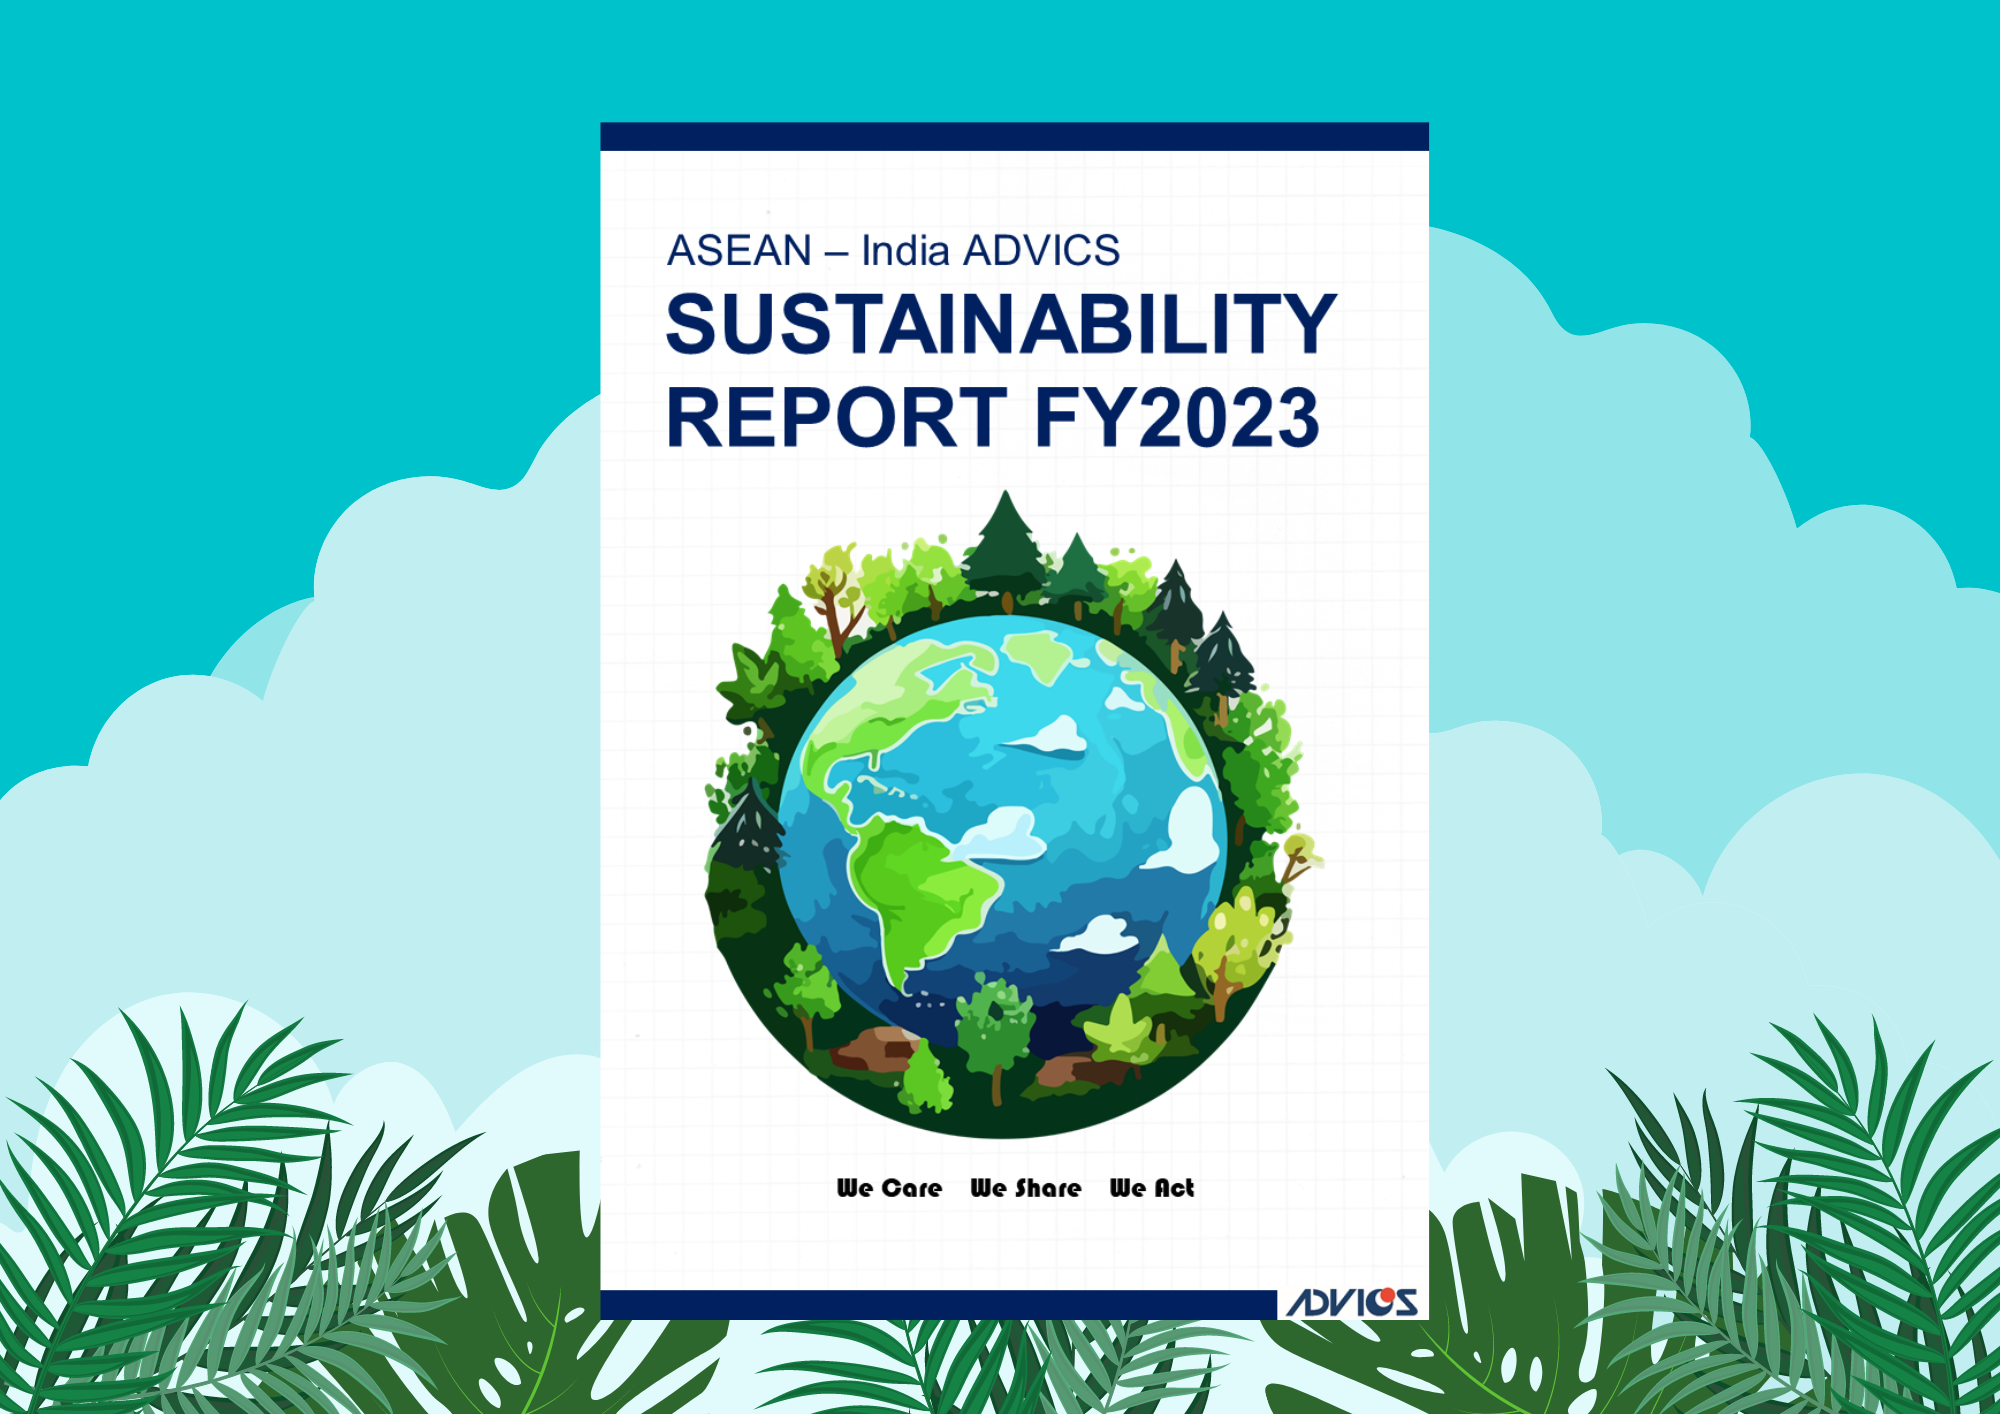 CSR report